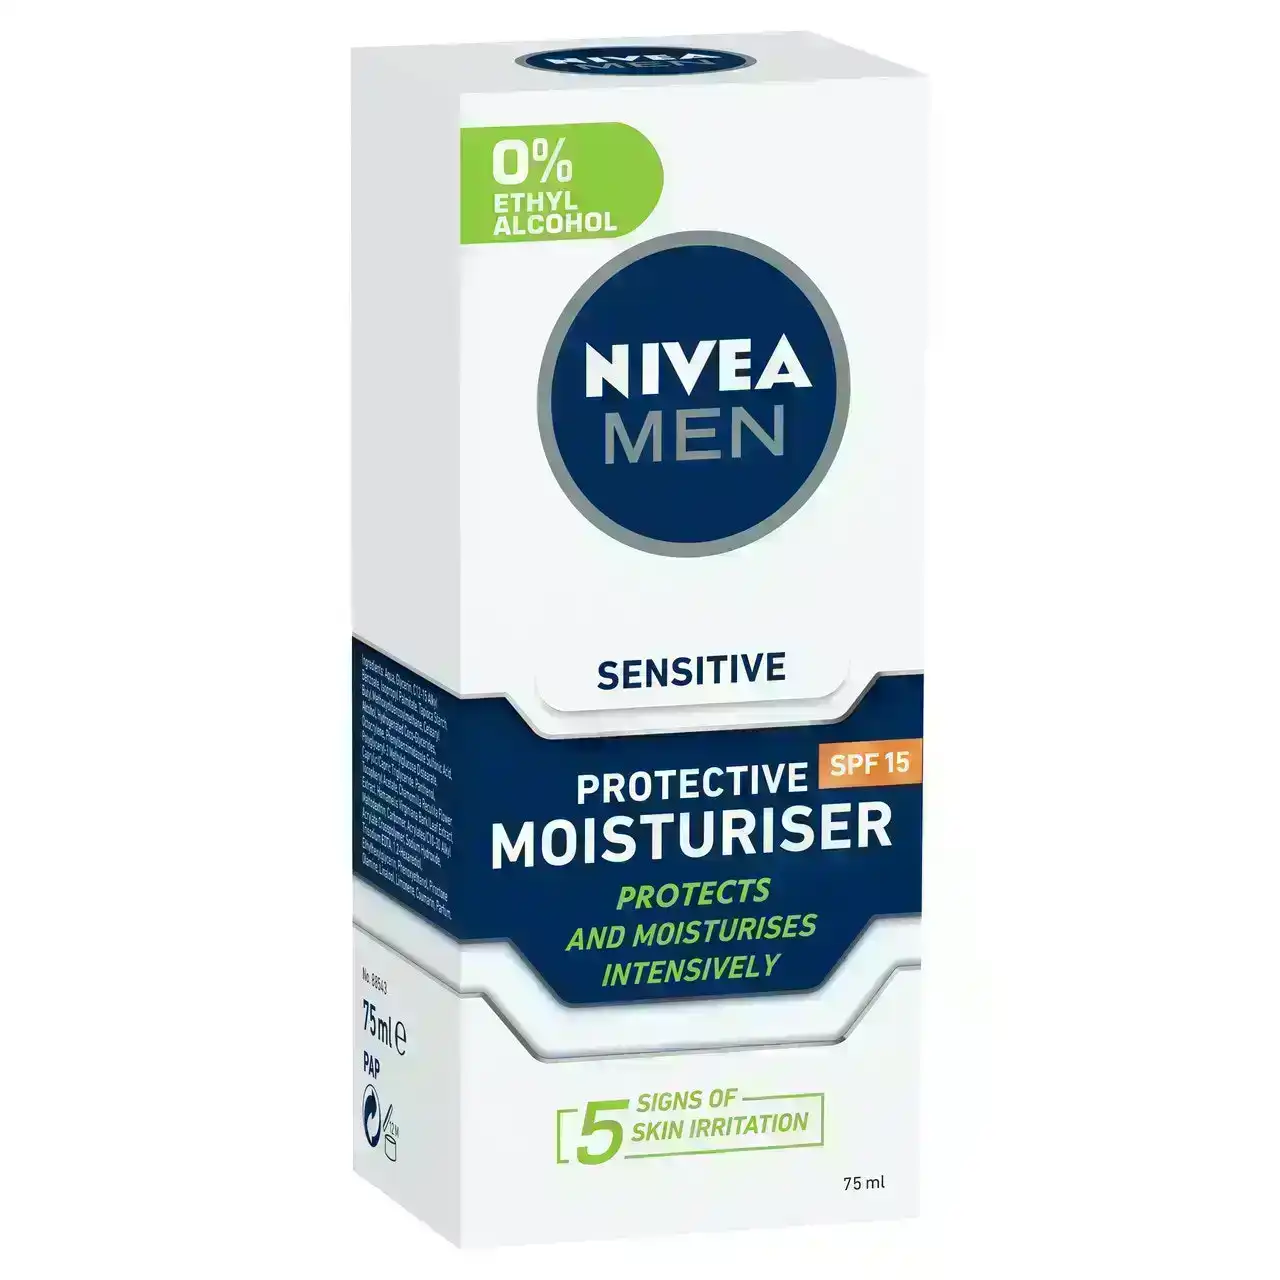 Nivea Nivea MEN Sensitive Protective Moisturiser SPF15 75ml